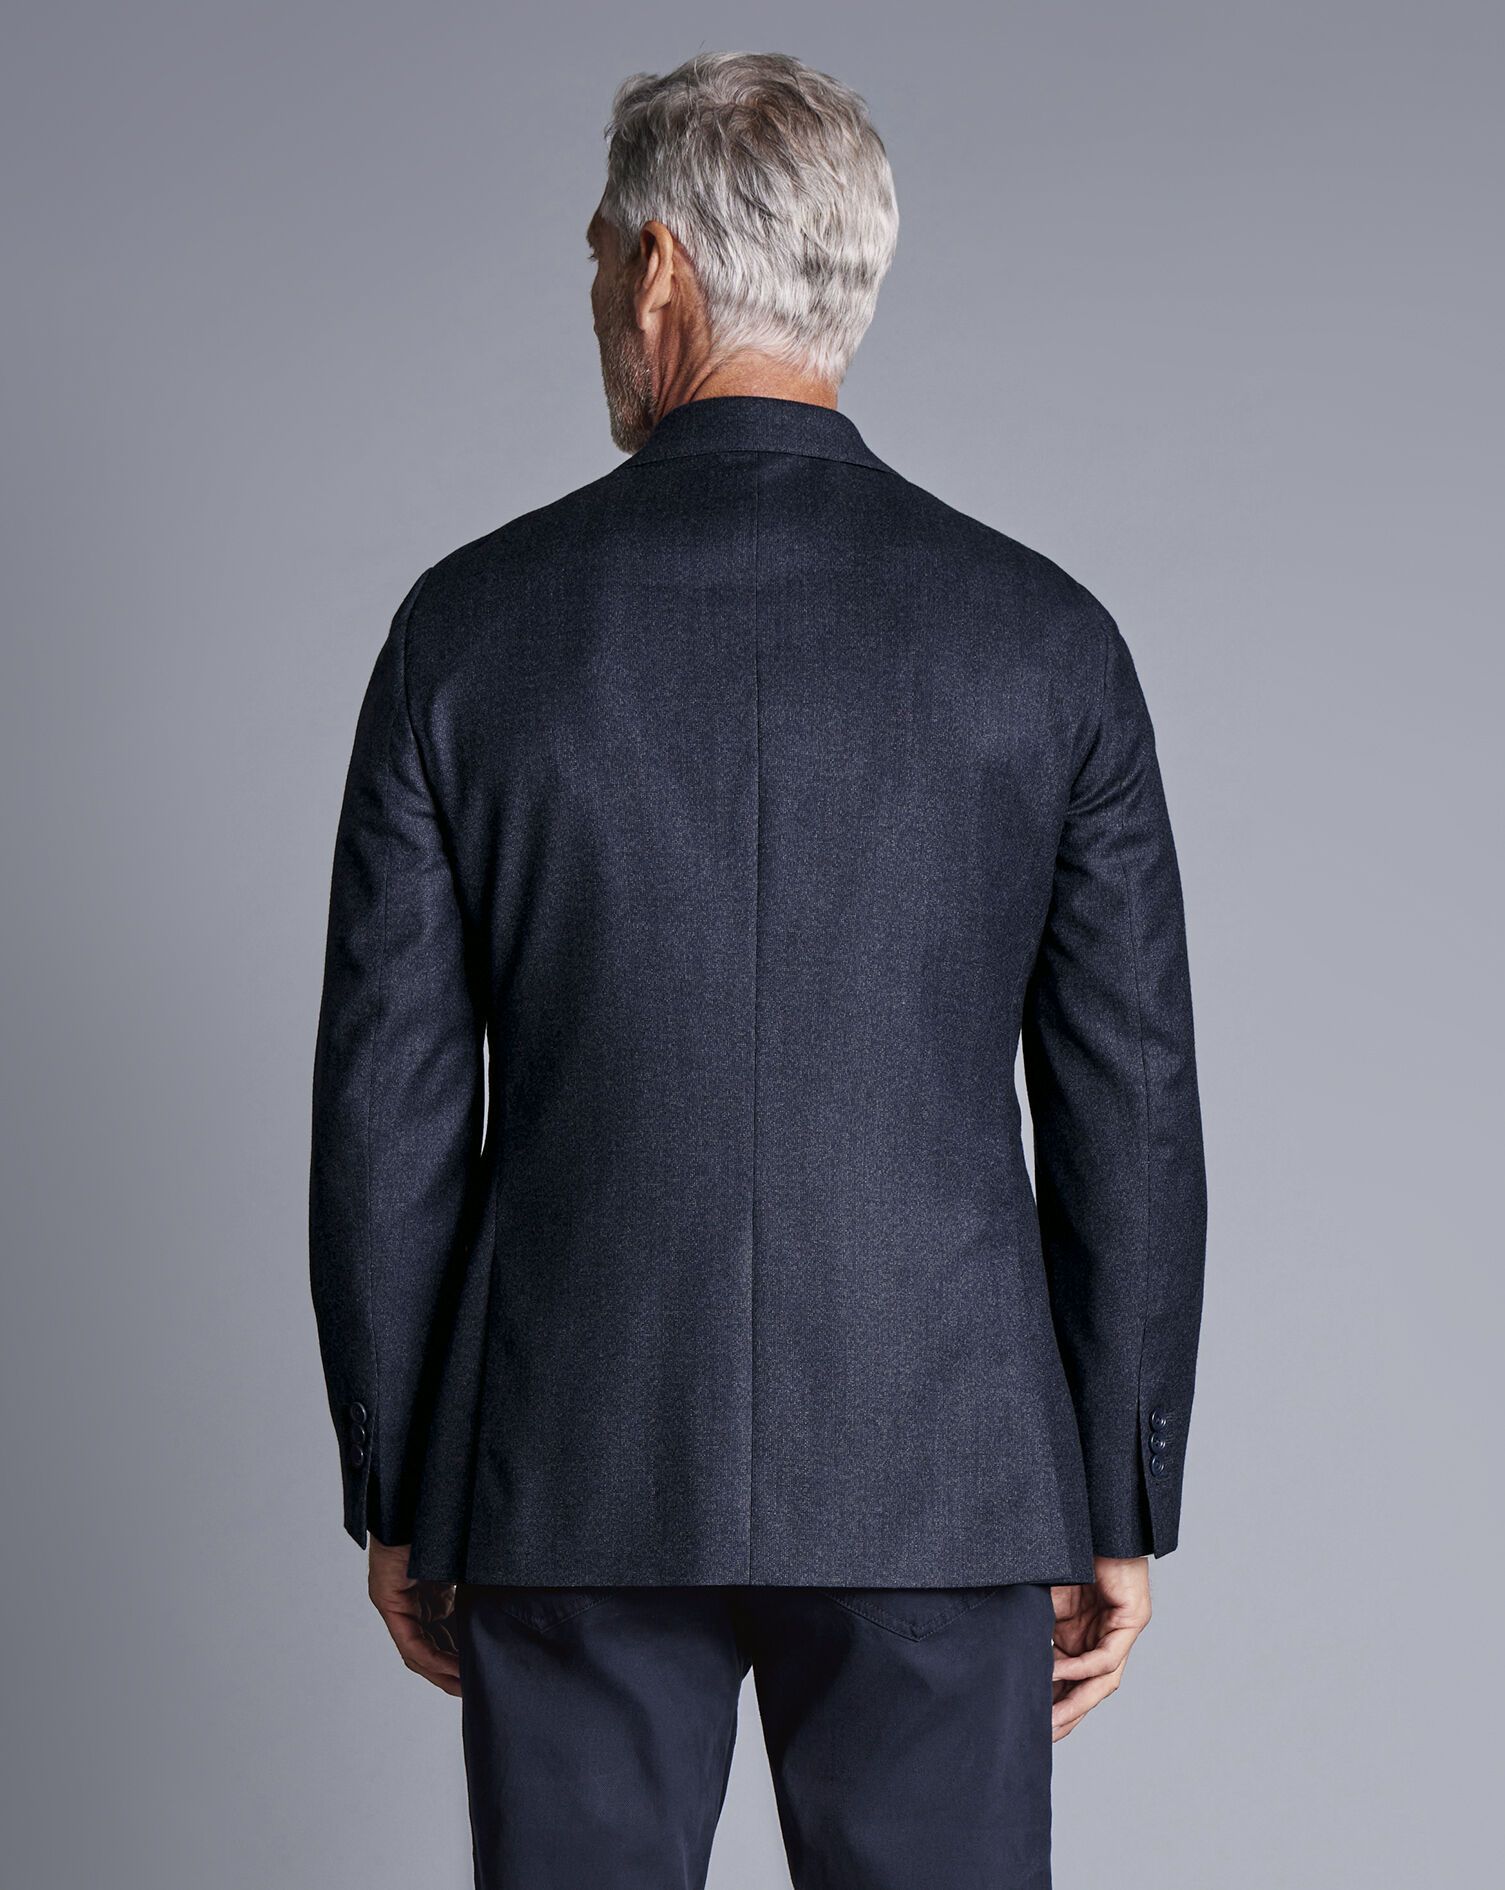 Double Breasted Italian Pindot Suit Jacket - Denim Blue